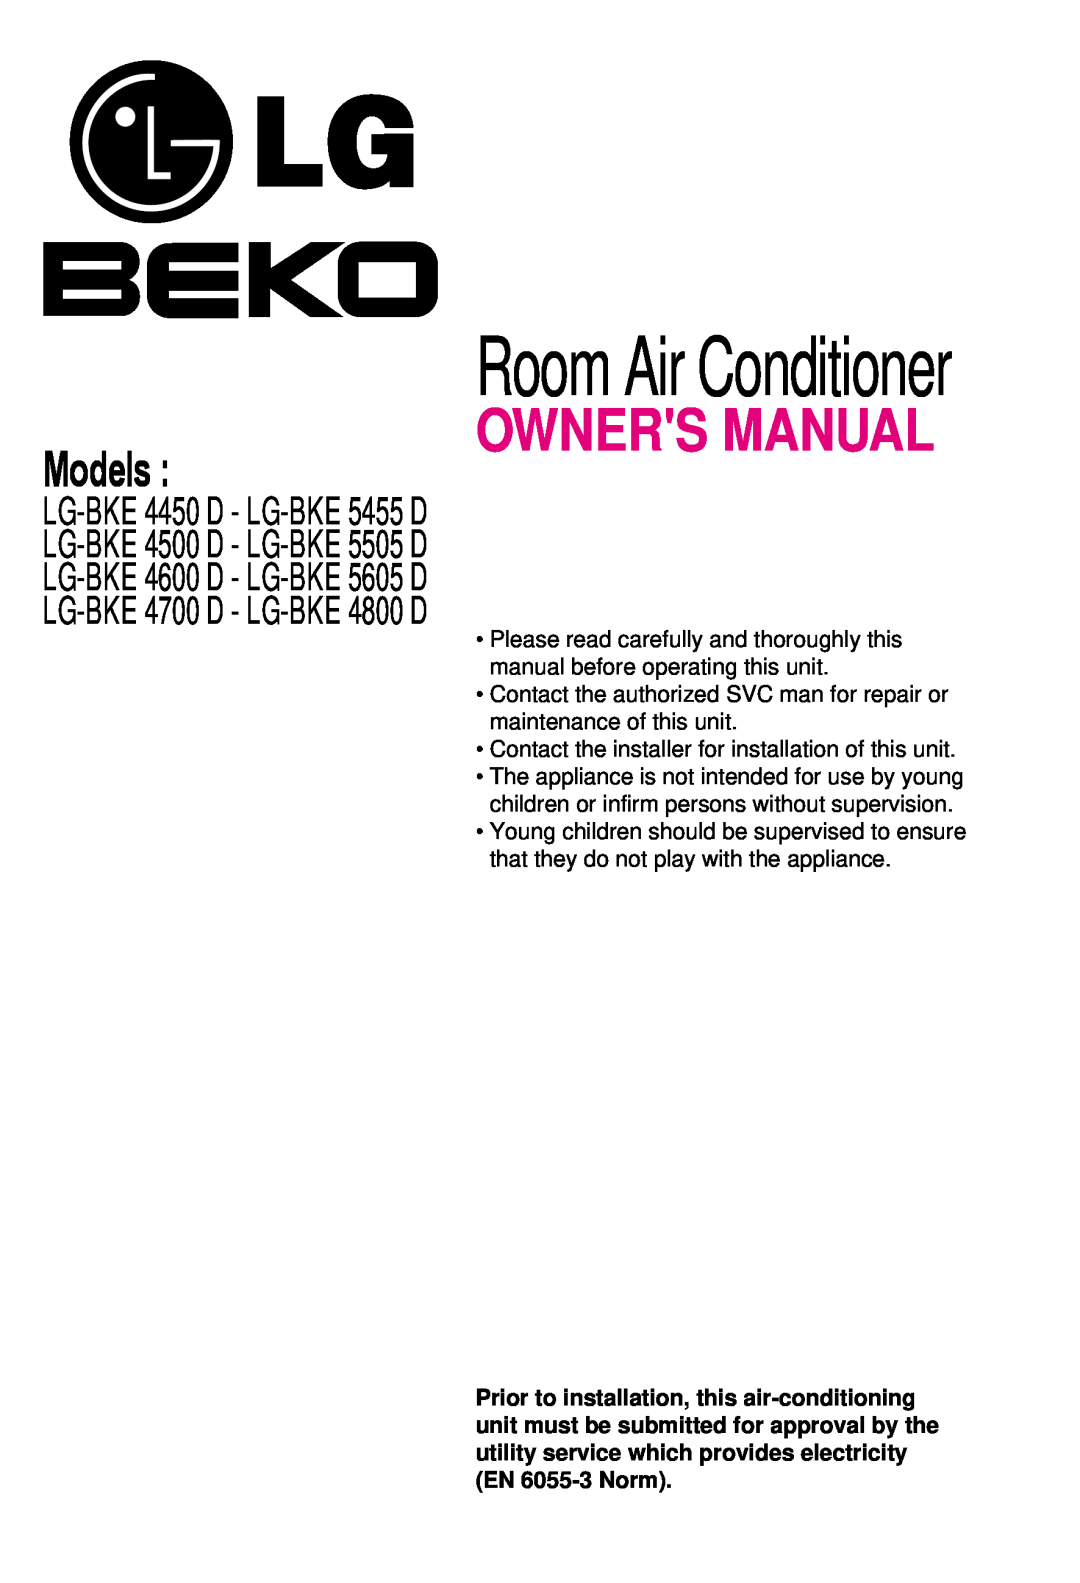 Beko LG-BKE4500 D, LG-BKE5505 D, LG-BKE 4600 D, LG-BKE 5605 D owner manual Room Air Conditioner, Models 